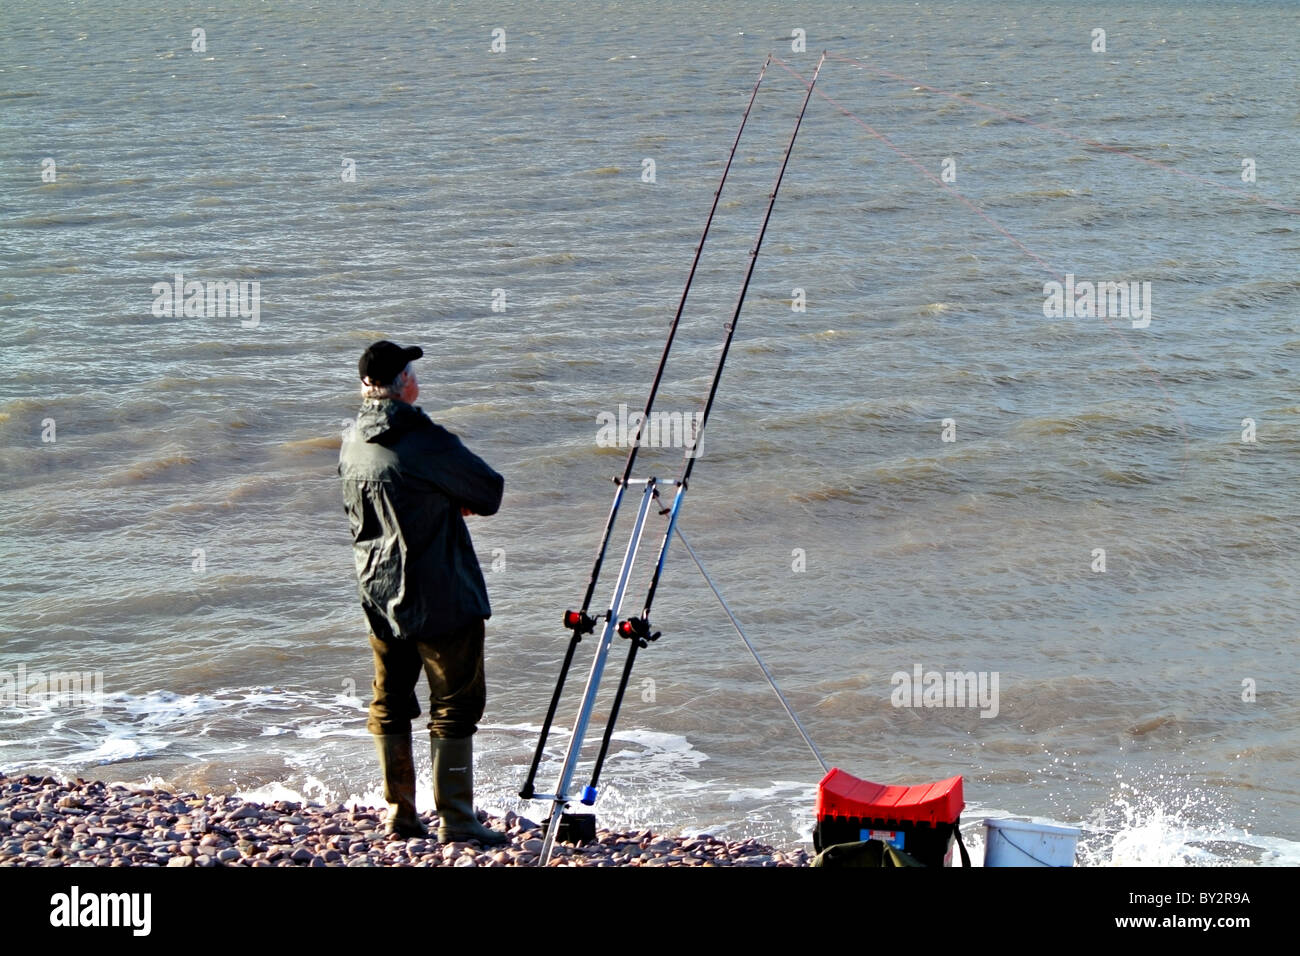 a man caught a fish on a fishing rod, fishing on a Salak, fishing